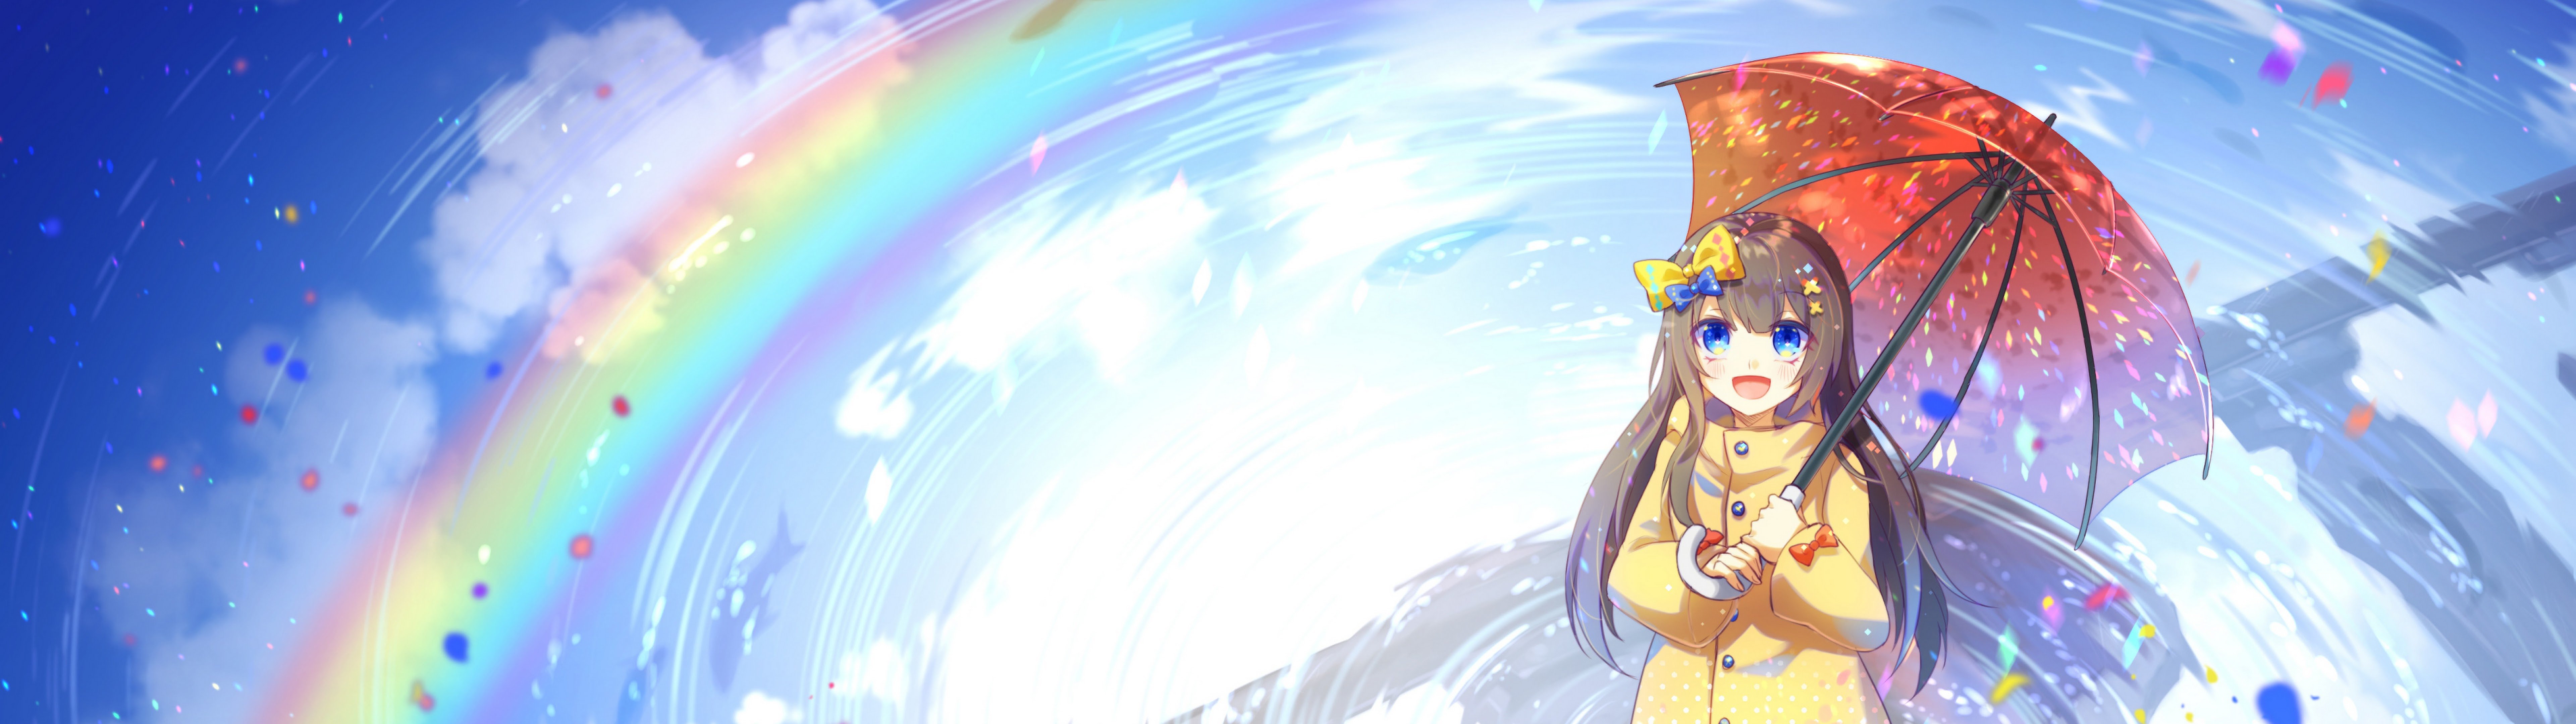 Anime Cute Girl Rainbow 4K Wallpaper